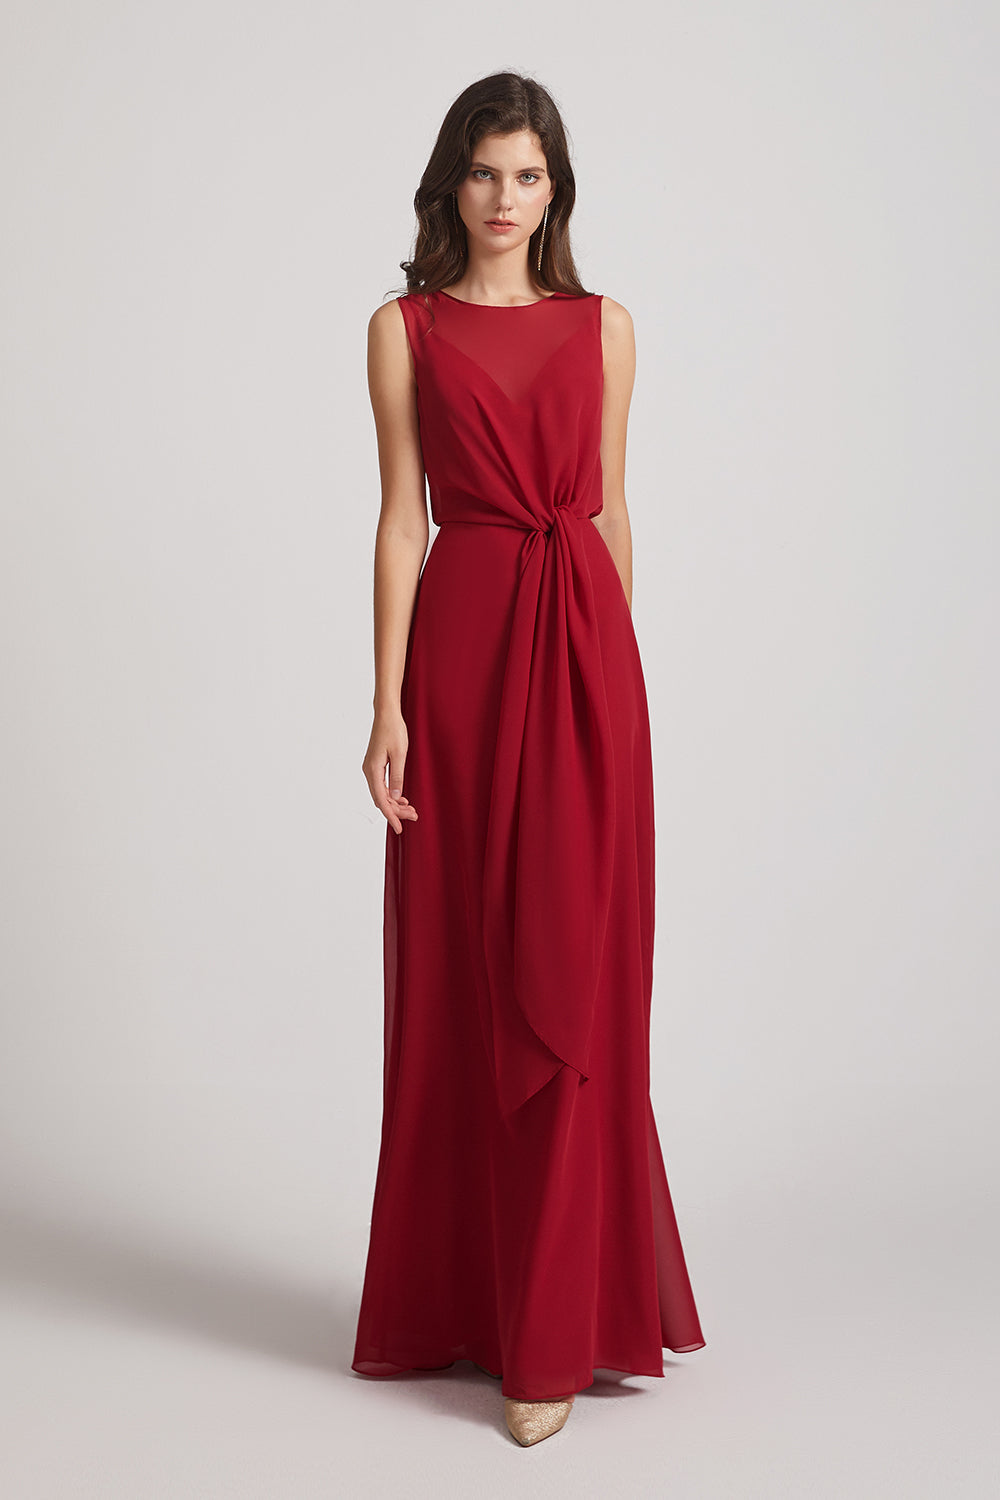 Alfa Bridal Dark Red Boat Neckline Bridesmaid Dresses with Waist Tie and Back Keyhole (AF0089)